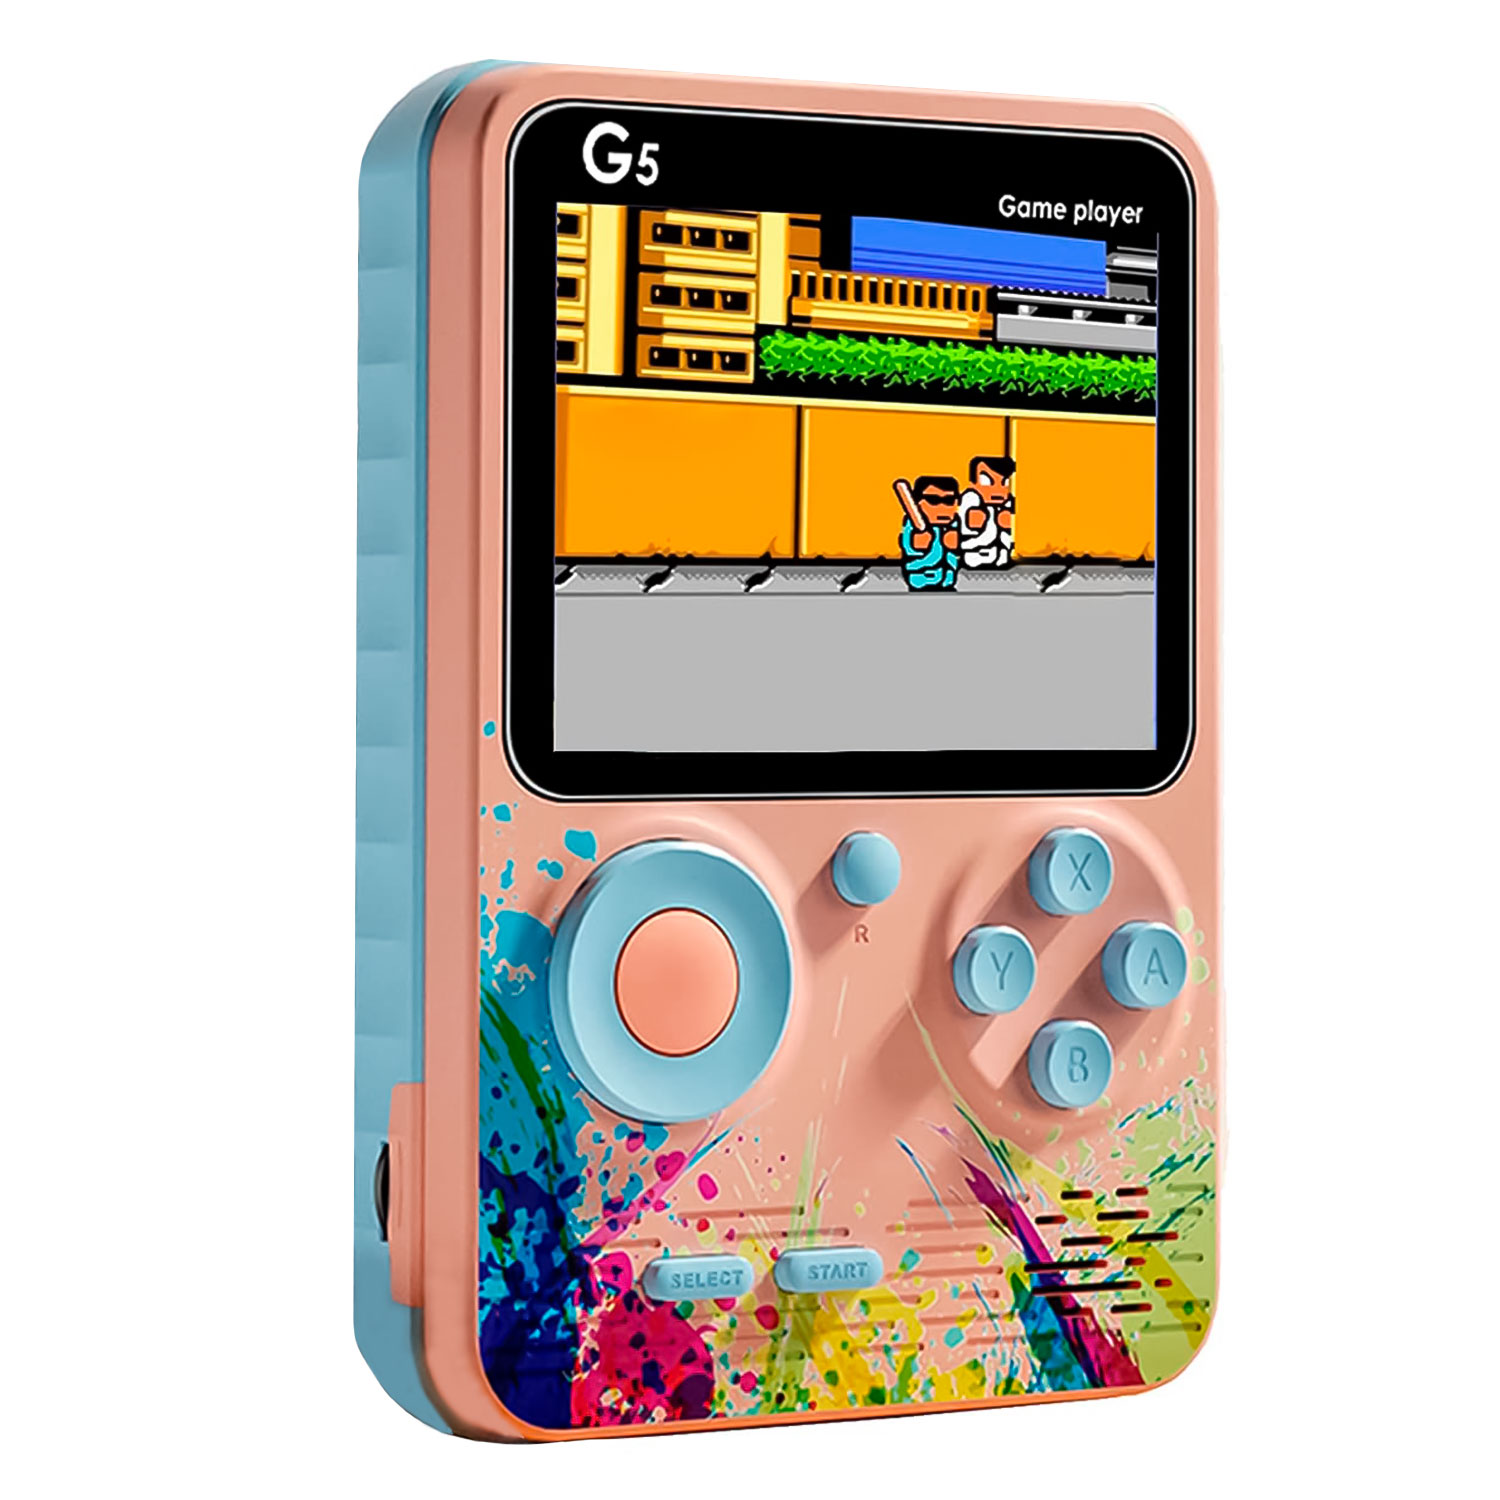 Console Portátil Game Boy Game Box G5 500 Jogos - Rosa